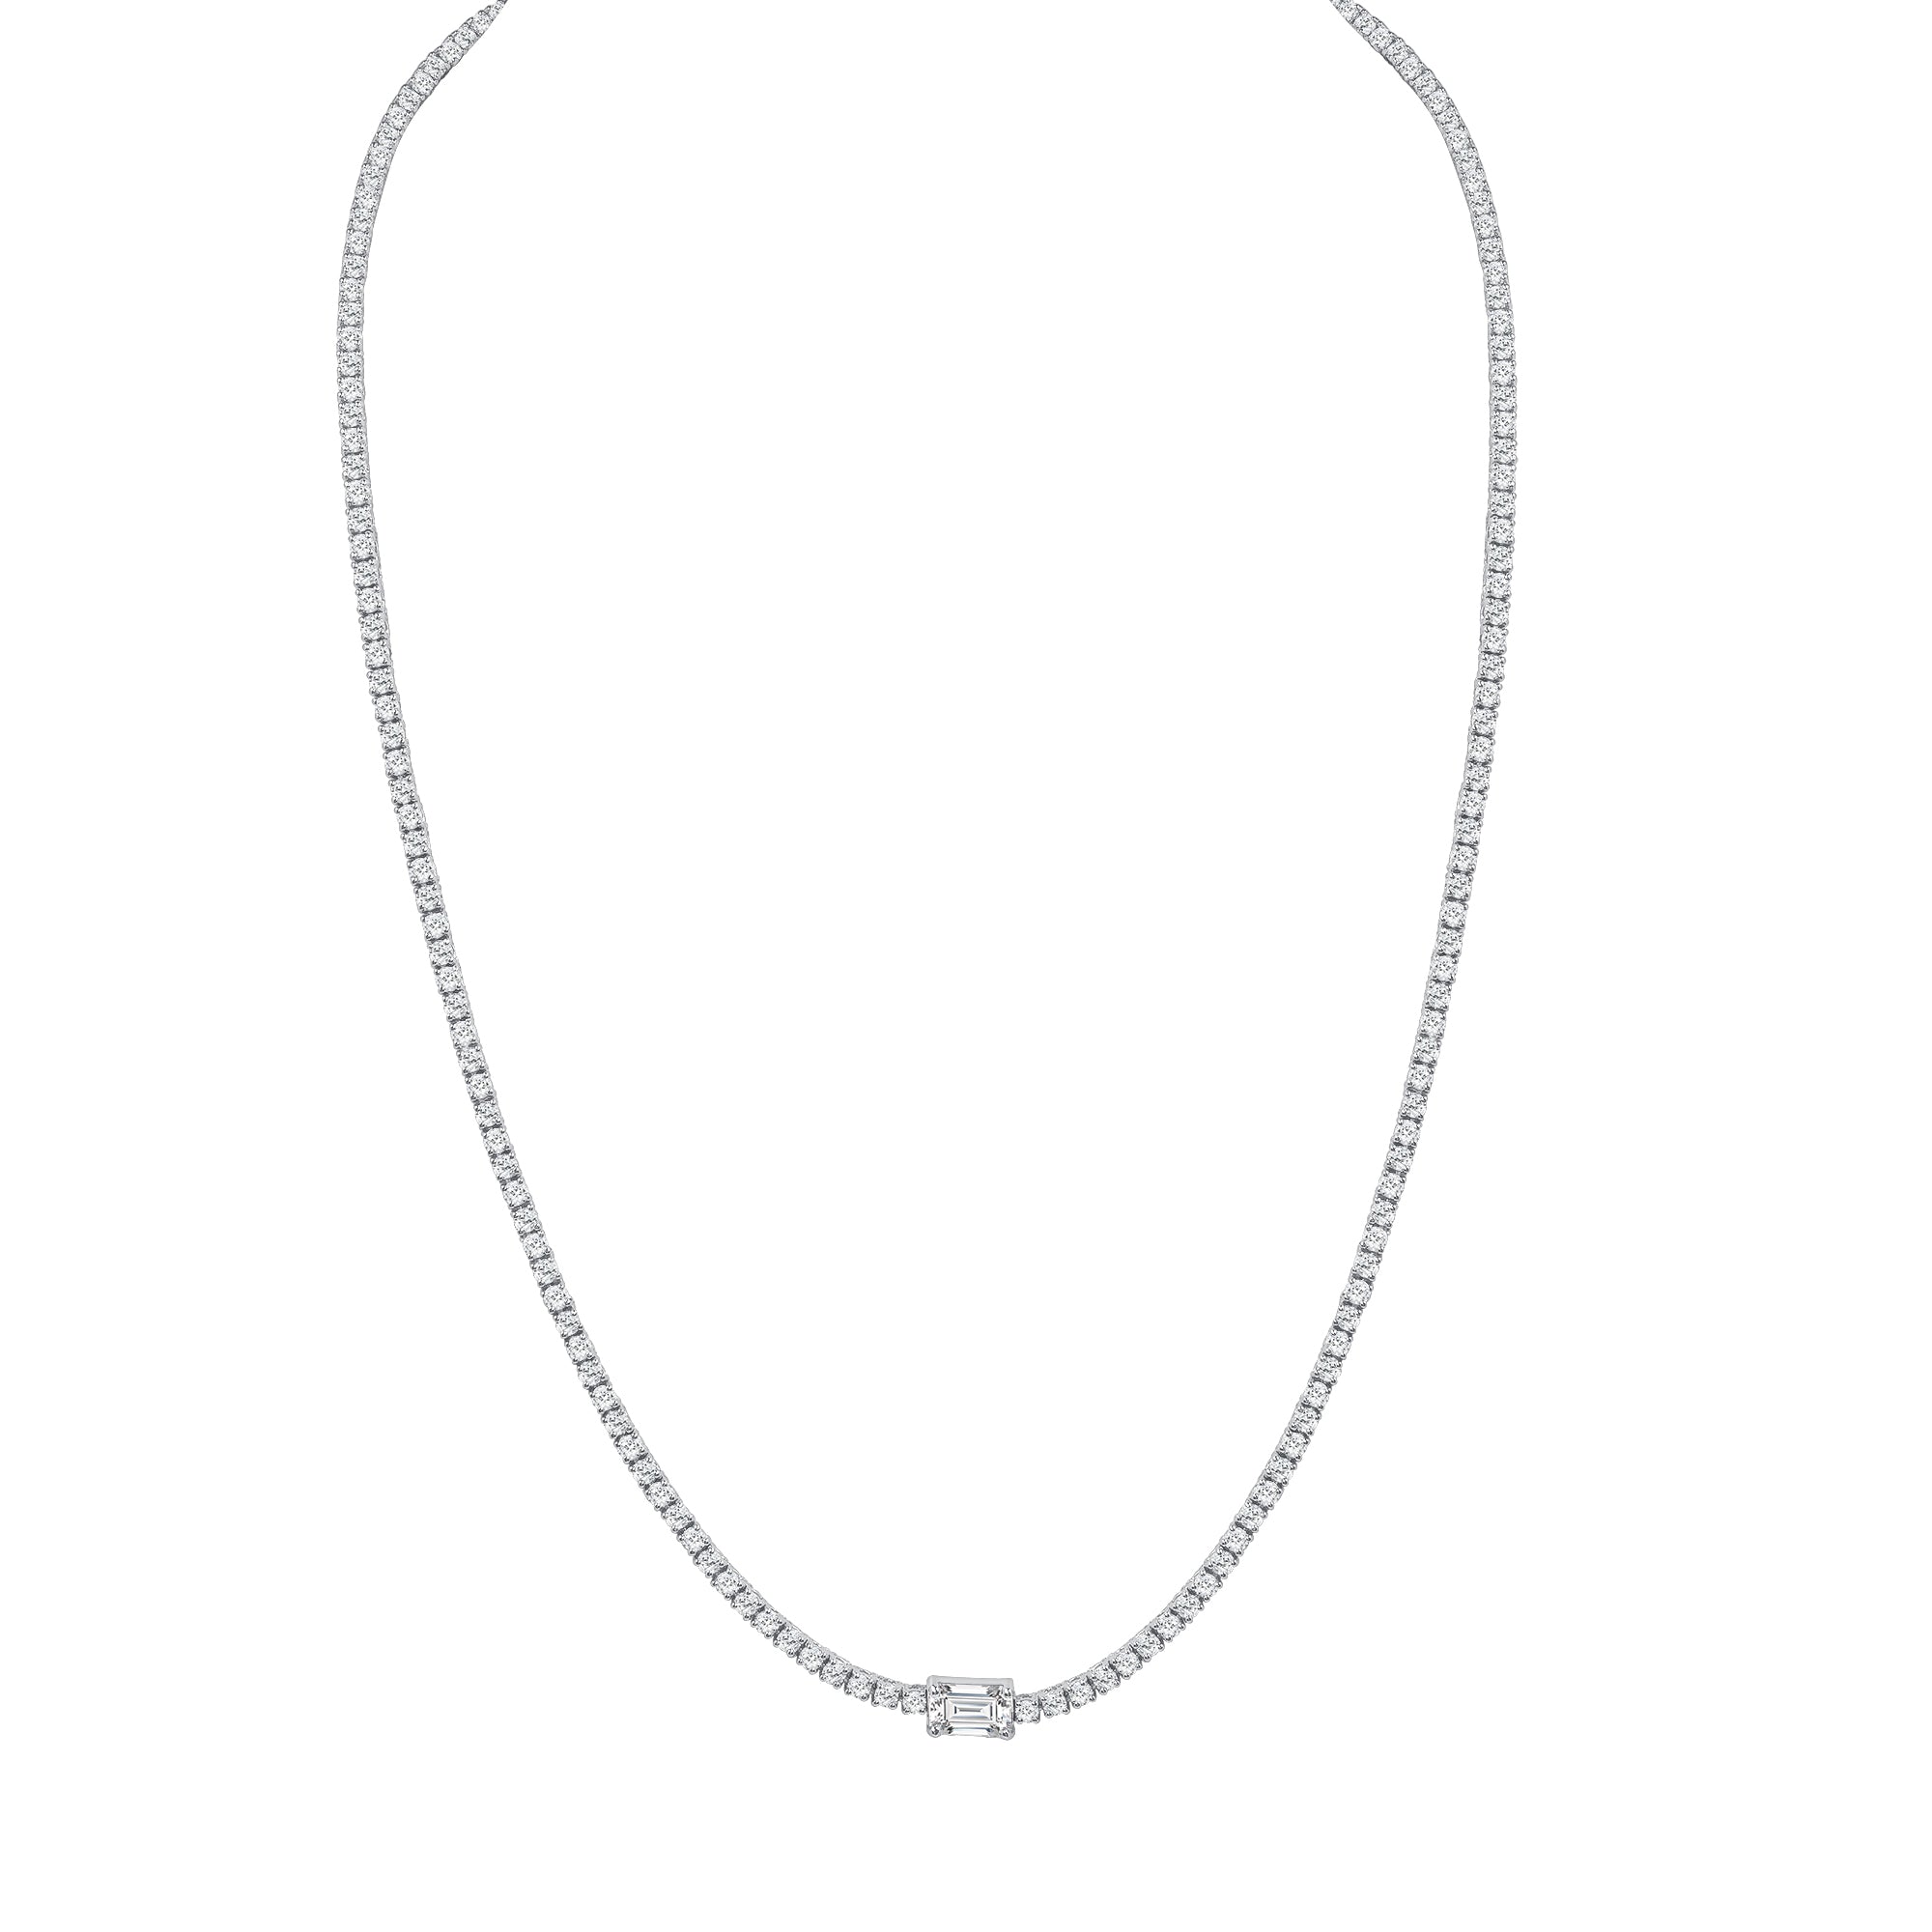 5.80ct Emerald Cut Center Stone Diamond Tennis Necklace in 18K White Gold